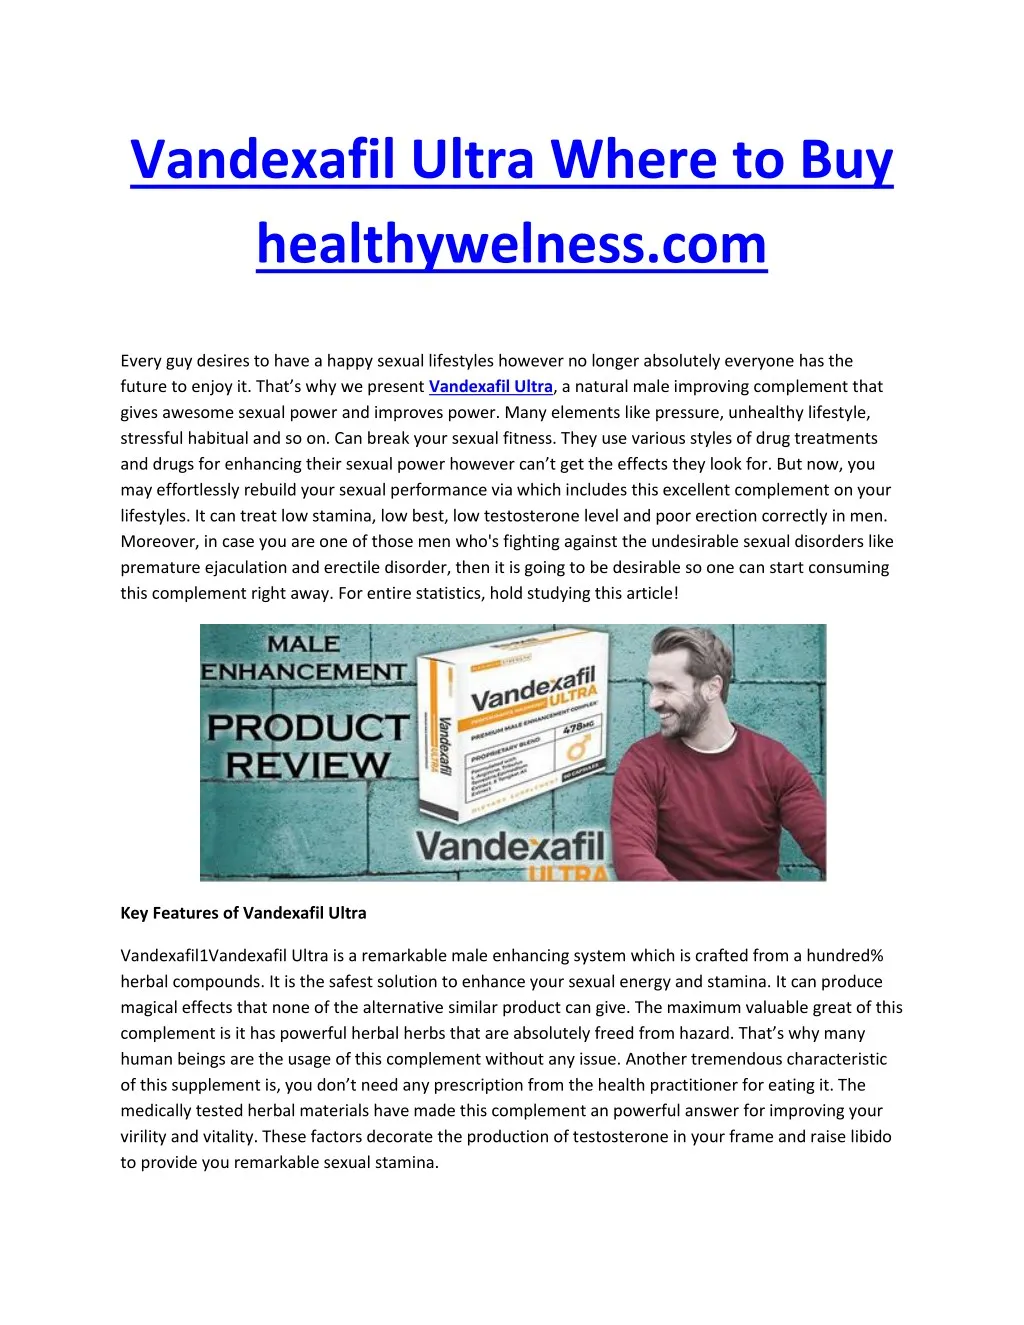 vandexafil ultra where to buy healthywelness com